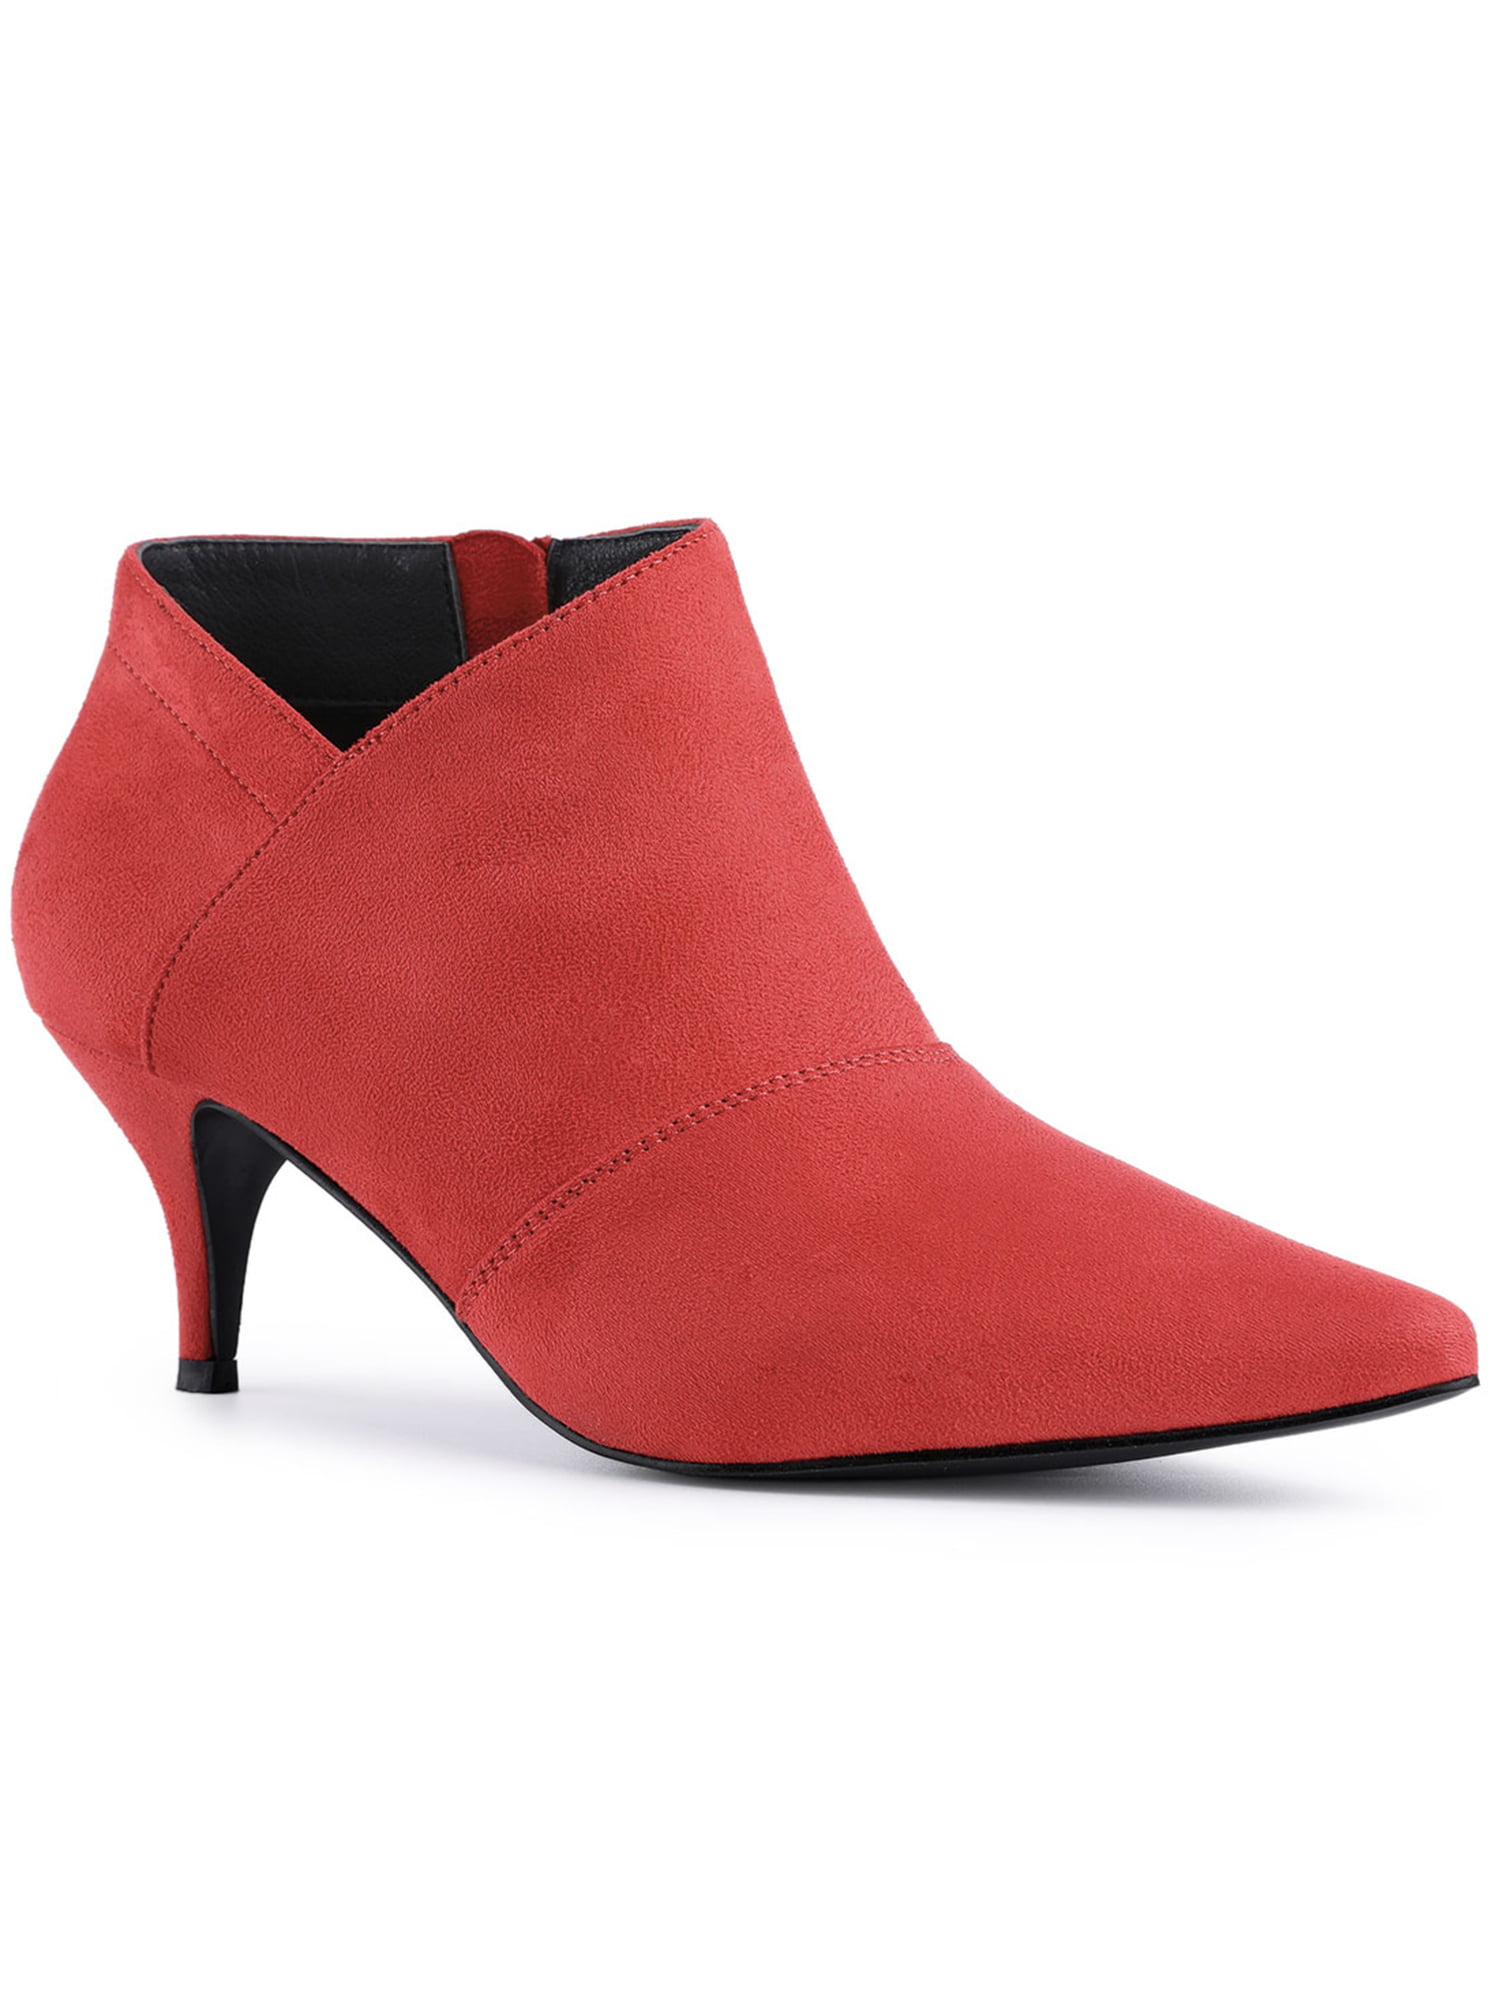 Ladies Faux Suede Round Toe Slip On Platform High Heel Stiletto Party Evening Court Shoes Size 2-7